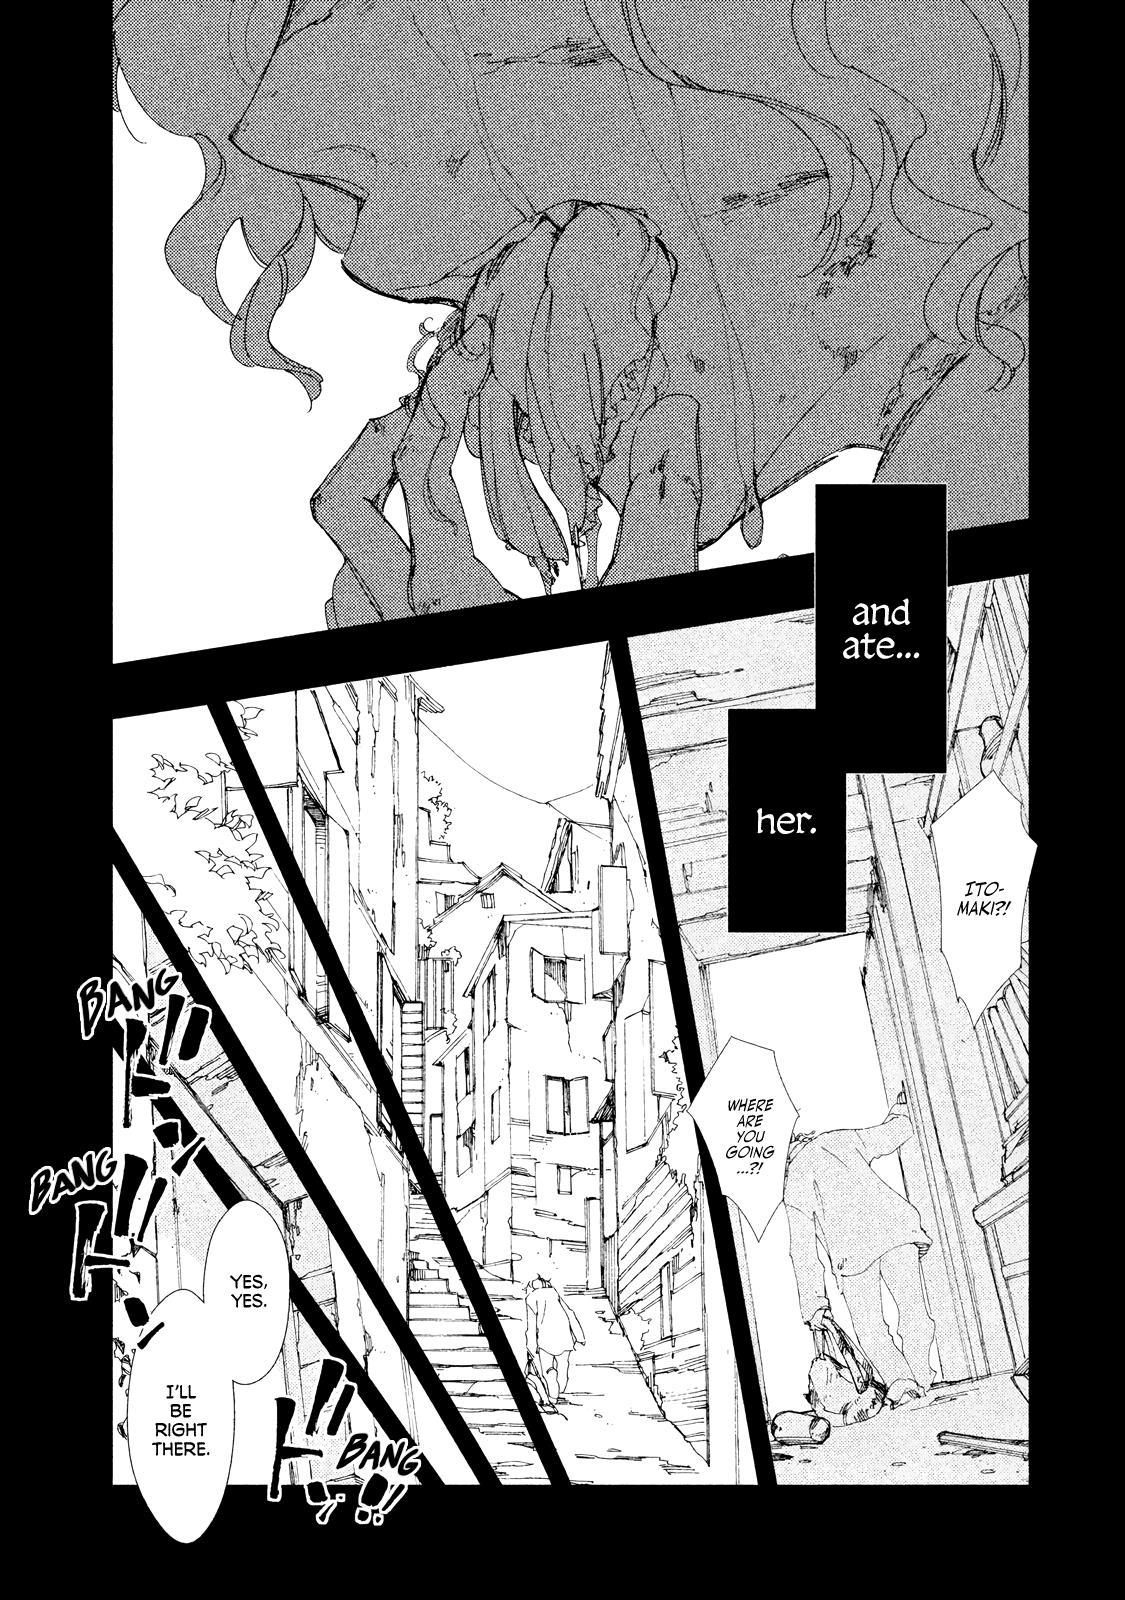 Amegashi - Page 4